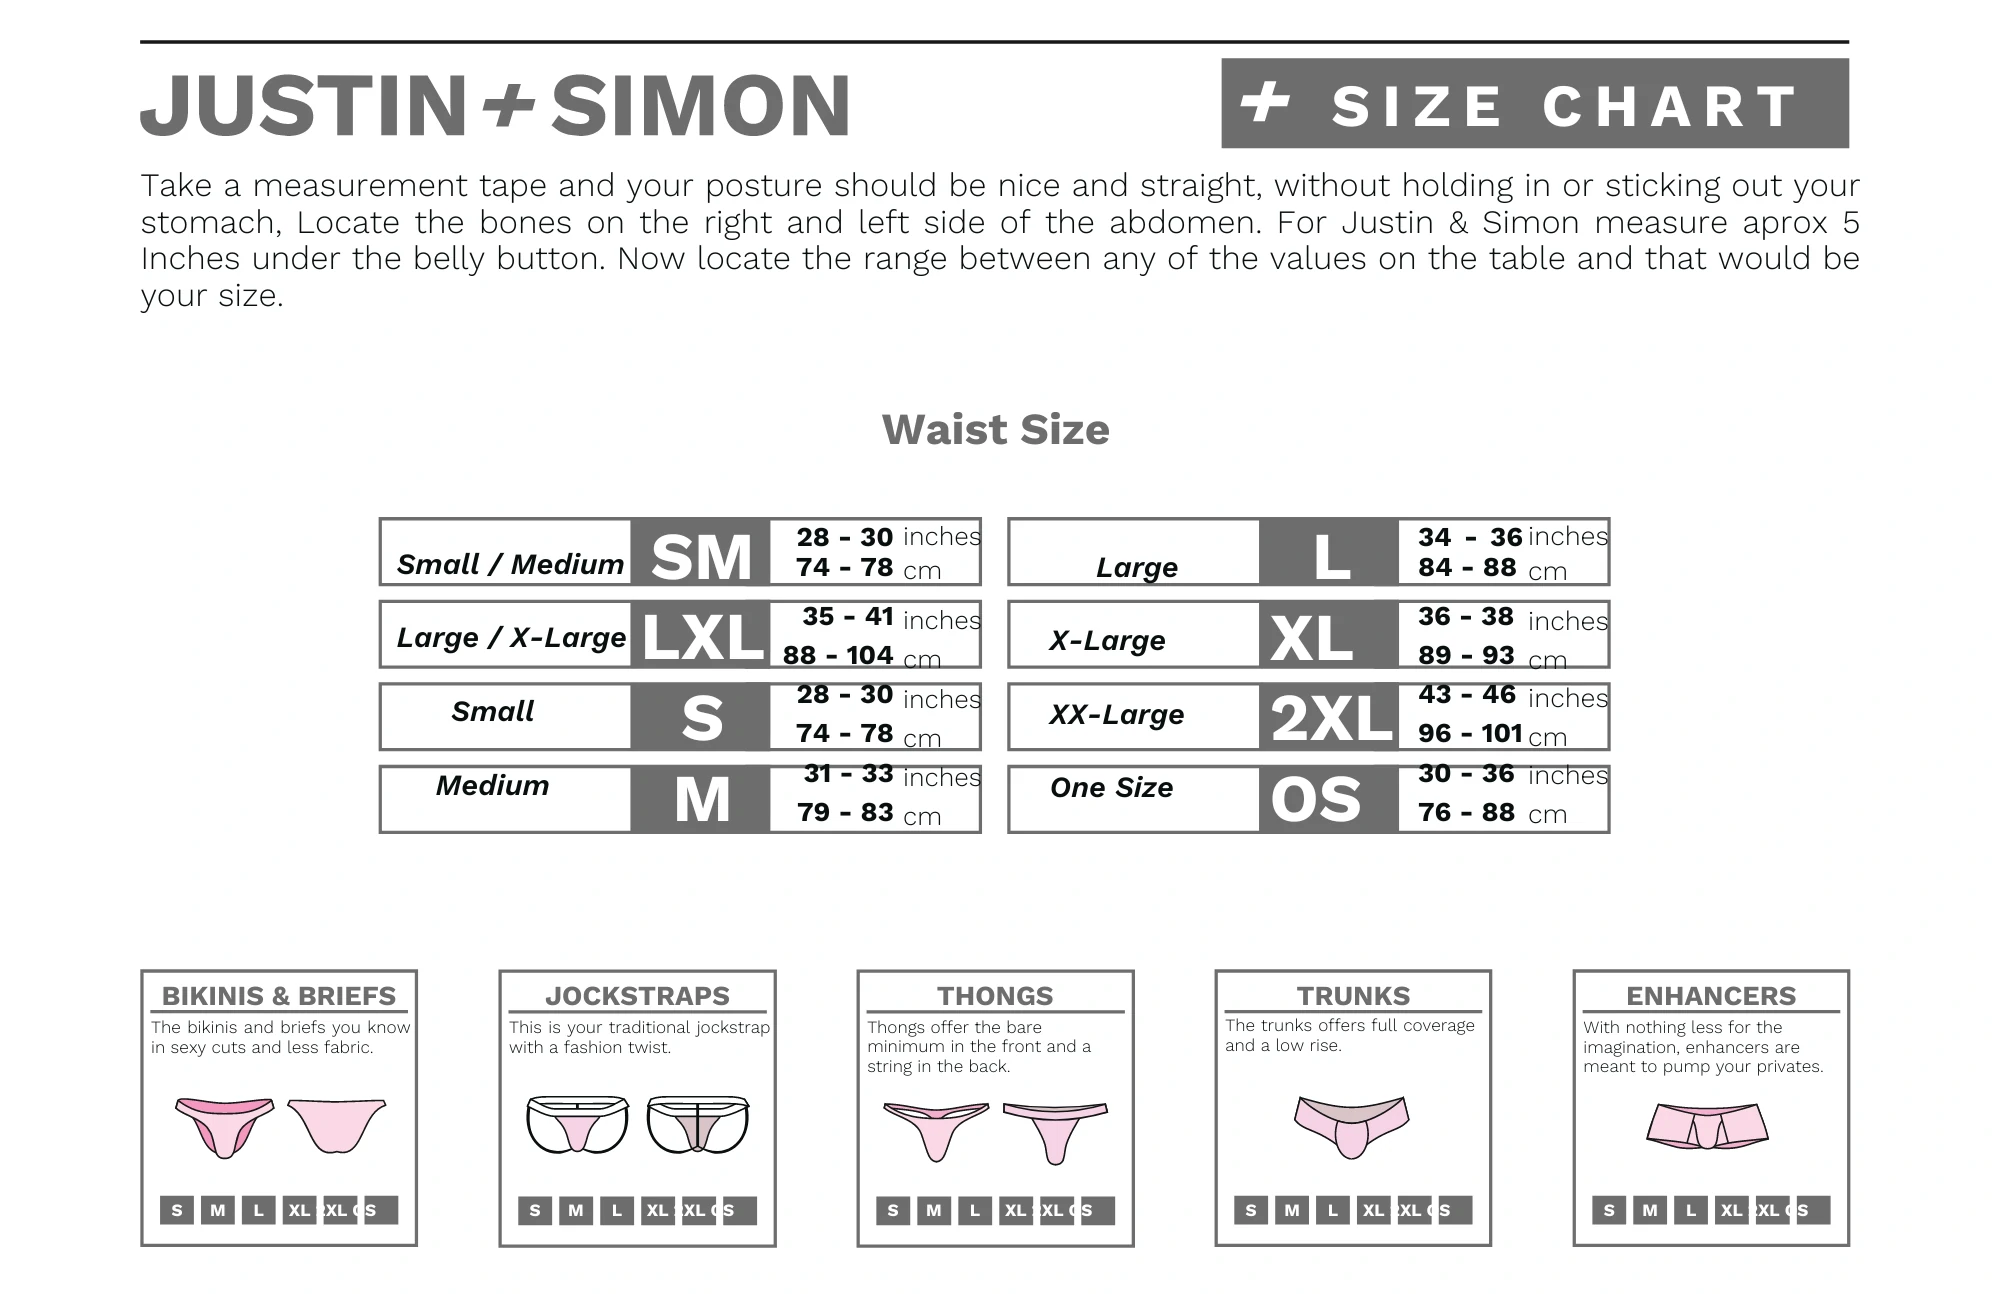 Justin + Simon Size Chart